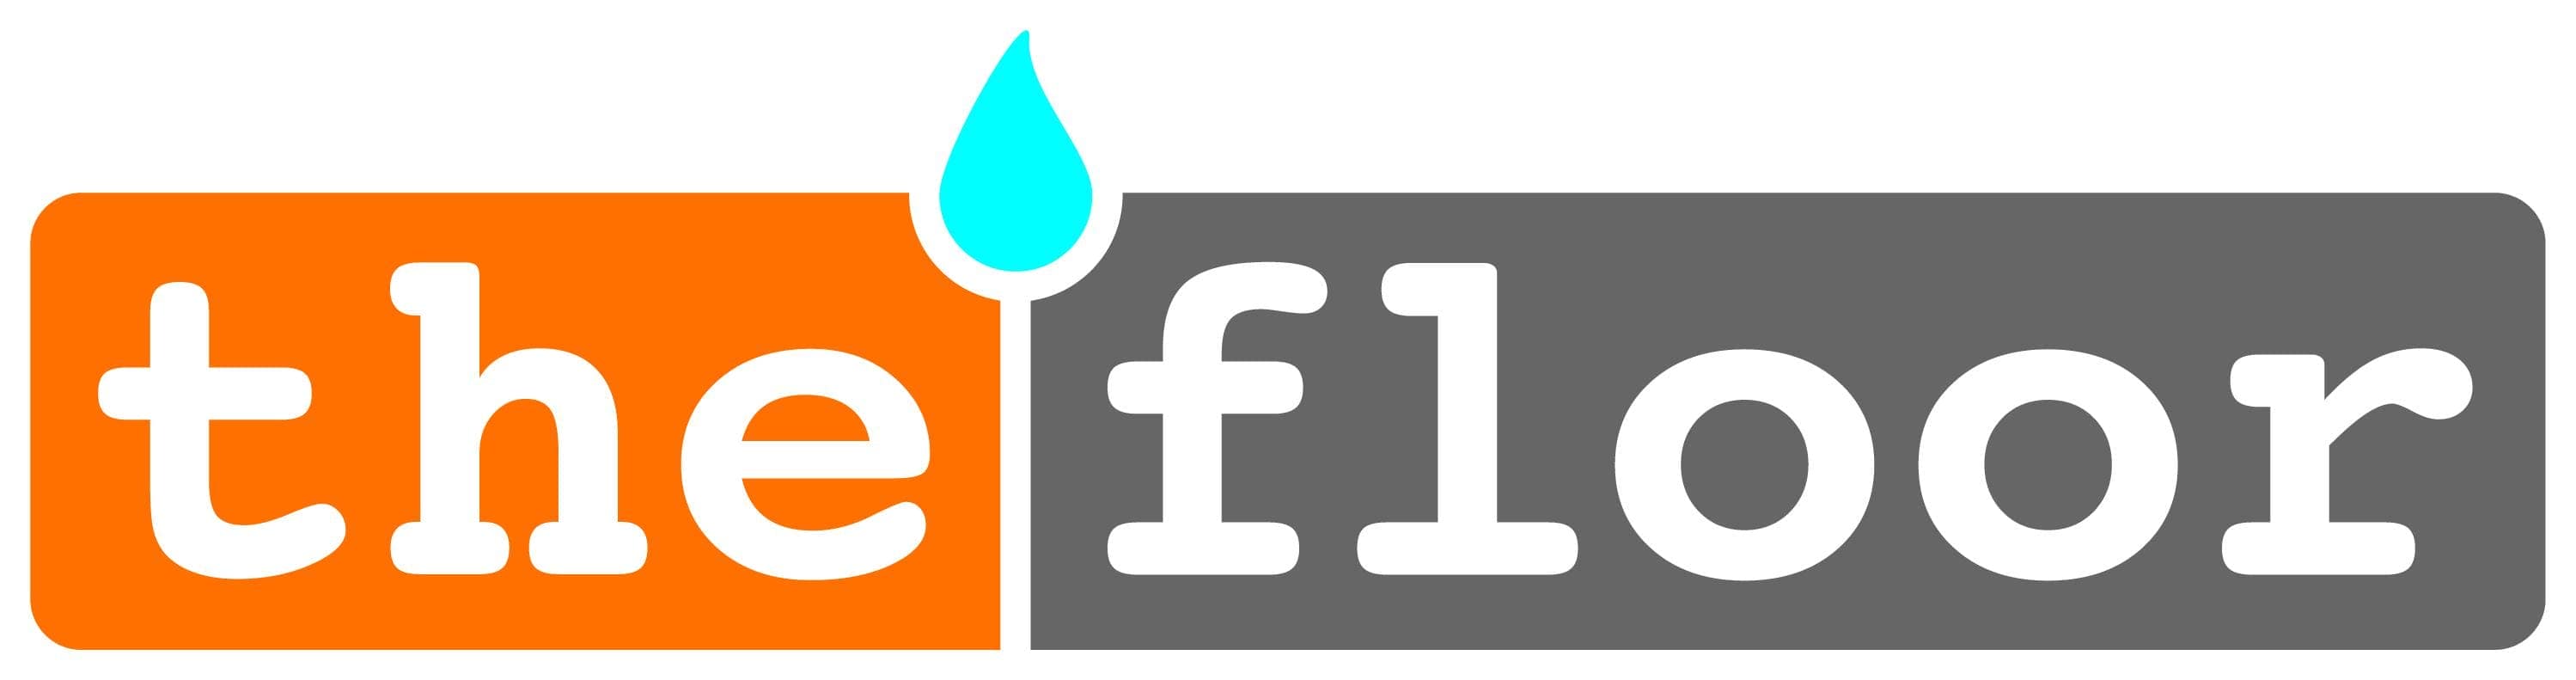 thefloor_logo